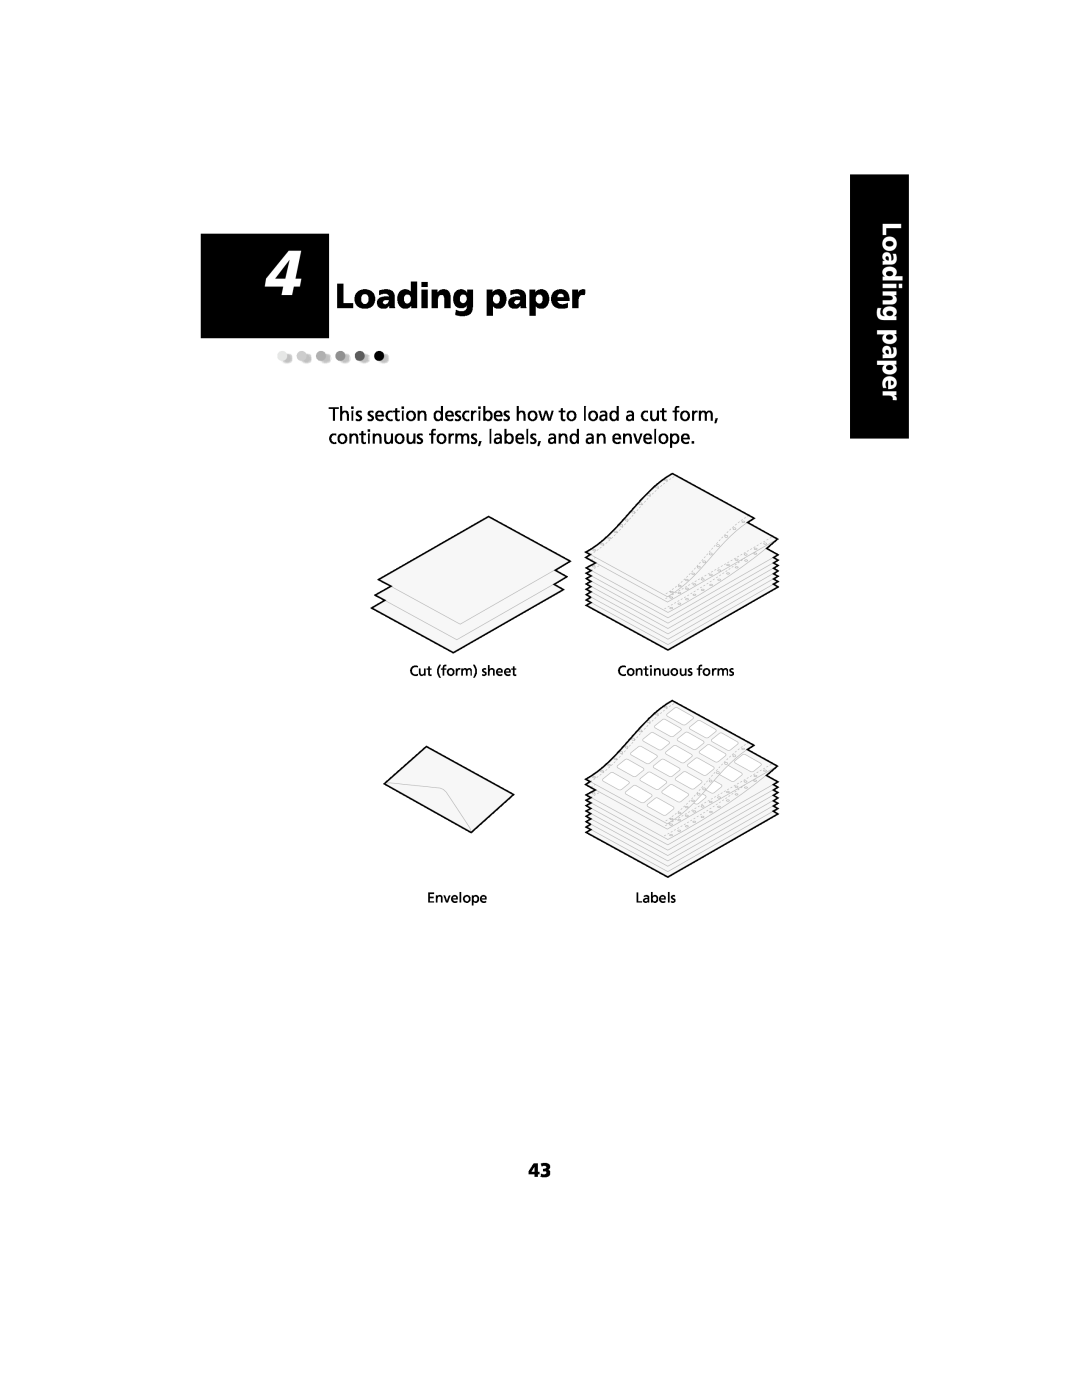 Lexmark 2480 manual Loading paper, Cut form sheet, Continuous forms, EnvelopeLabels 